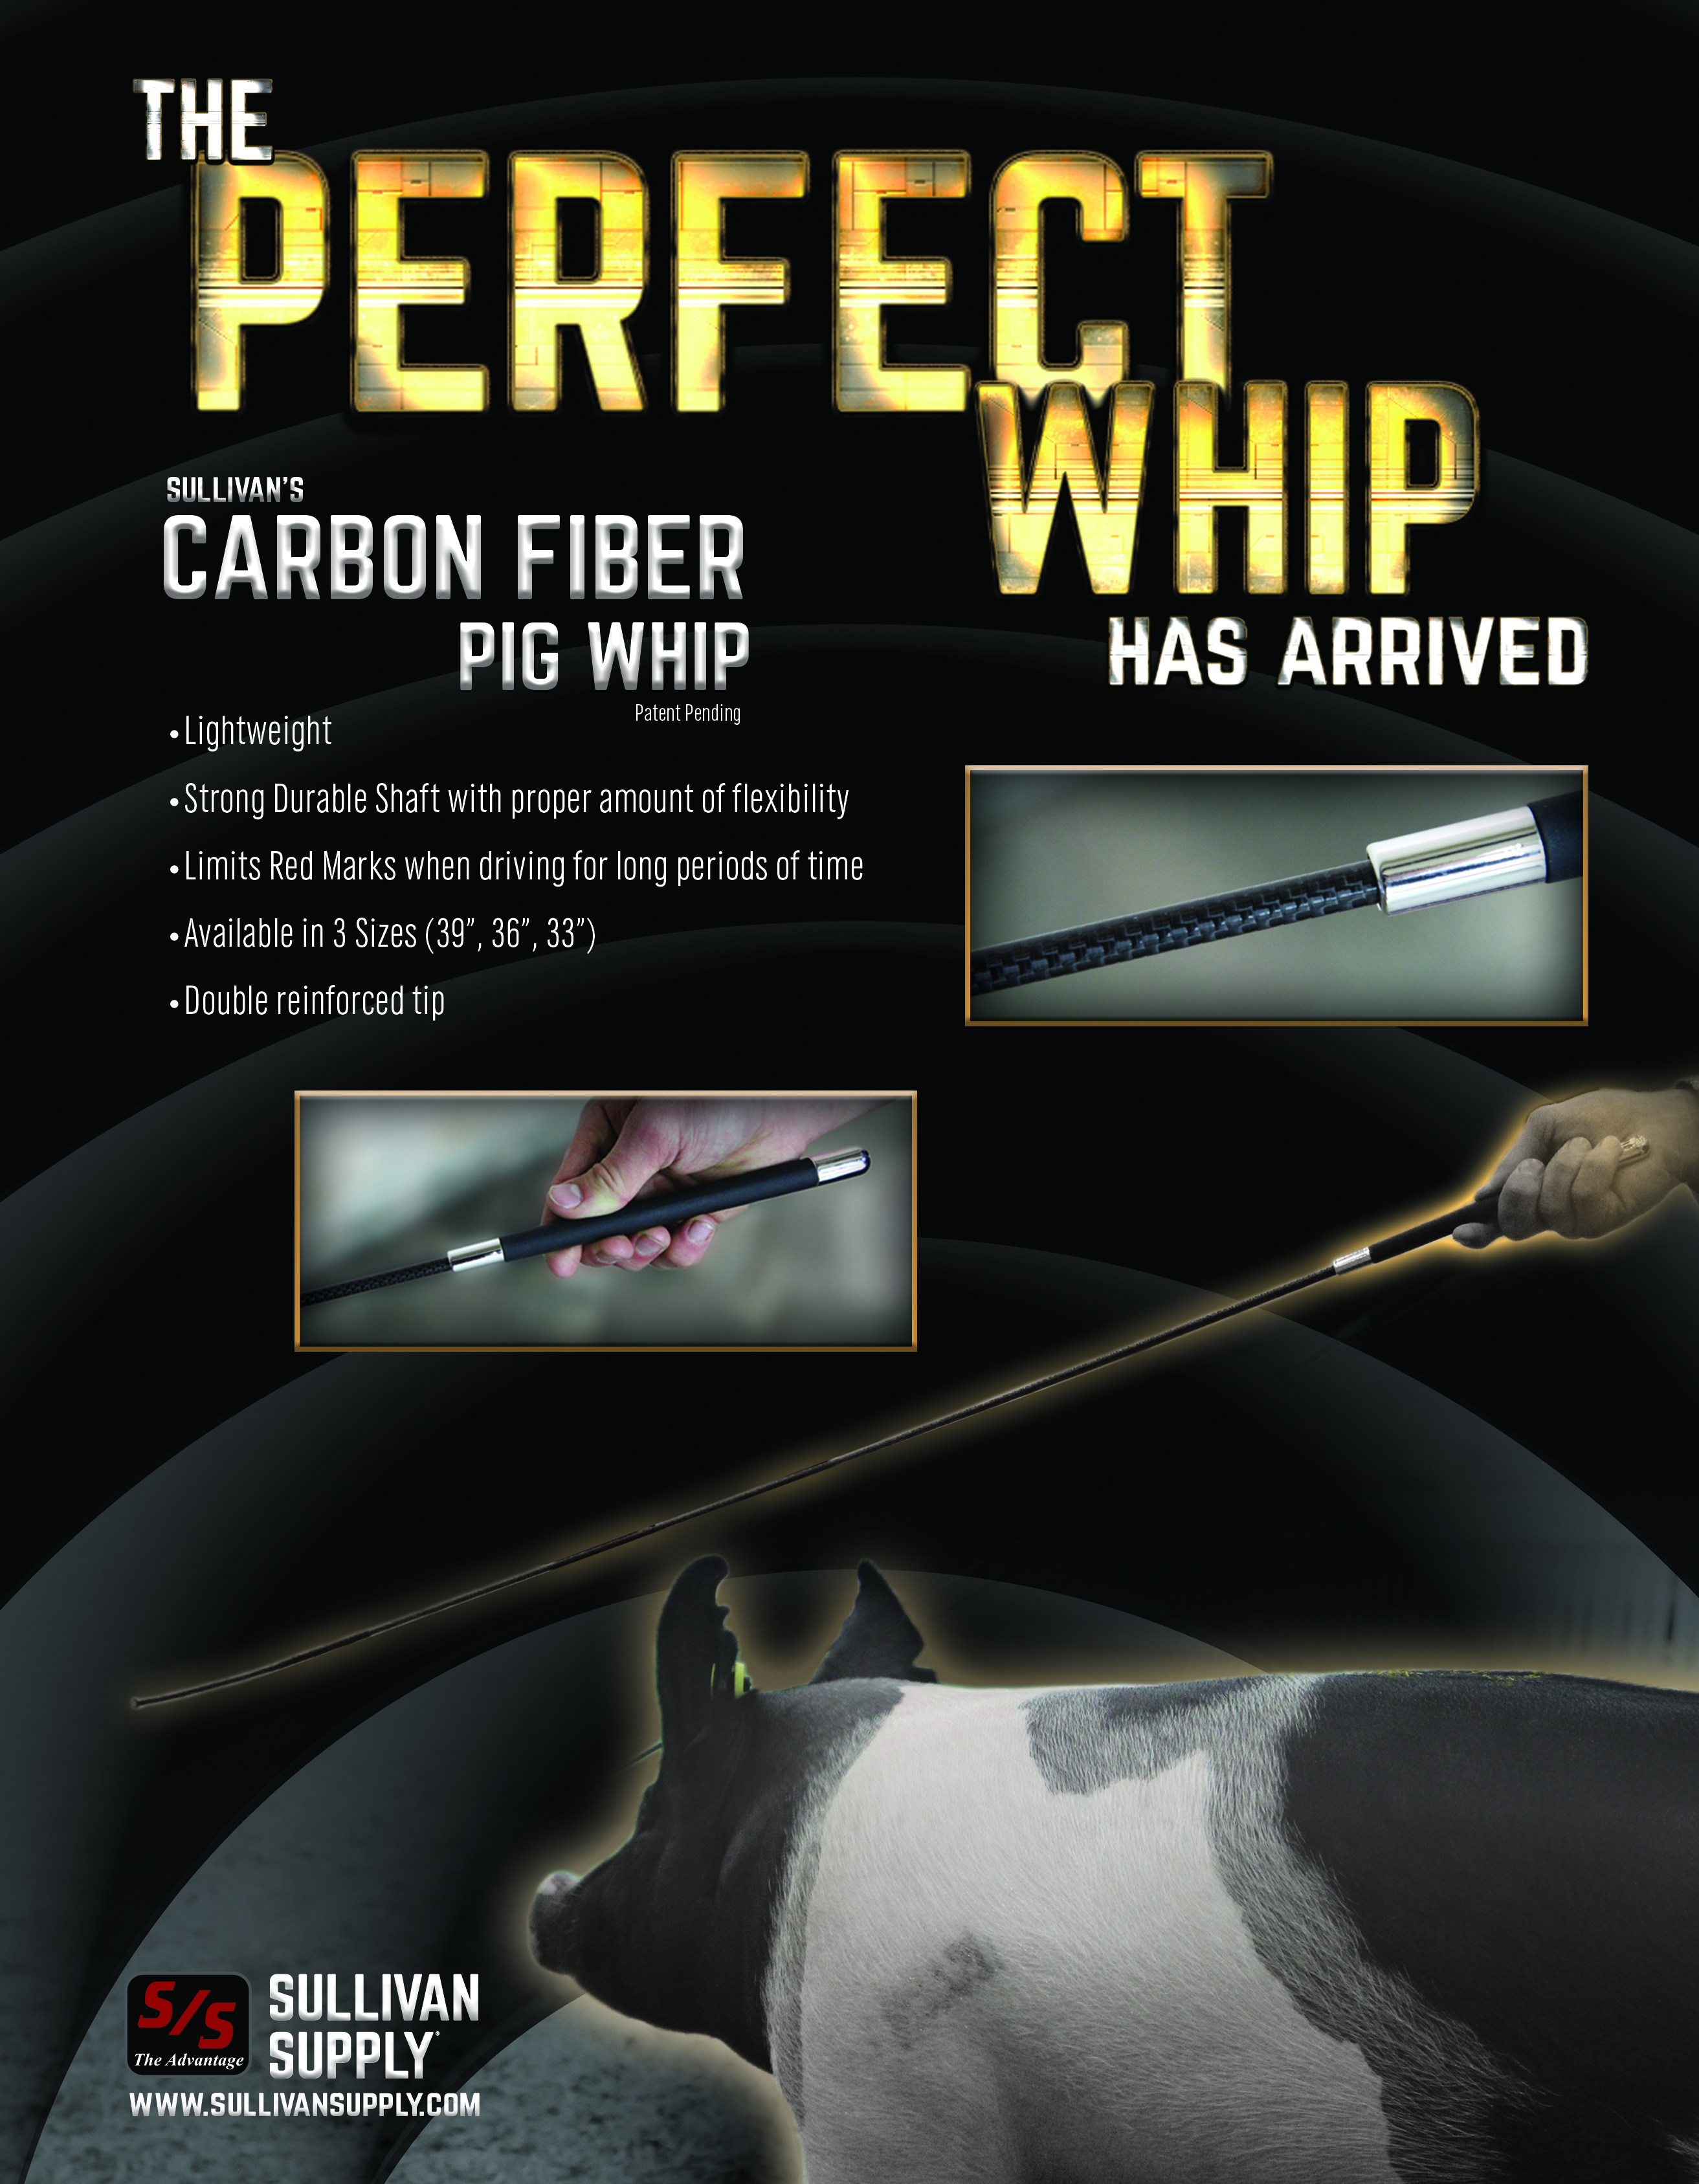 Sullivan's Carbon Fiber Pig Whip – Sullivan Supply, Inc.